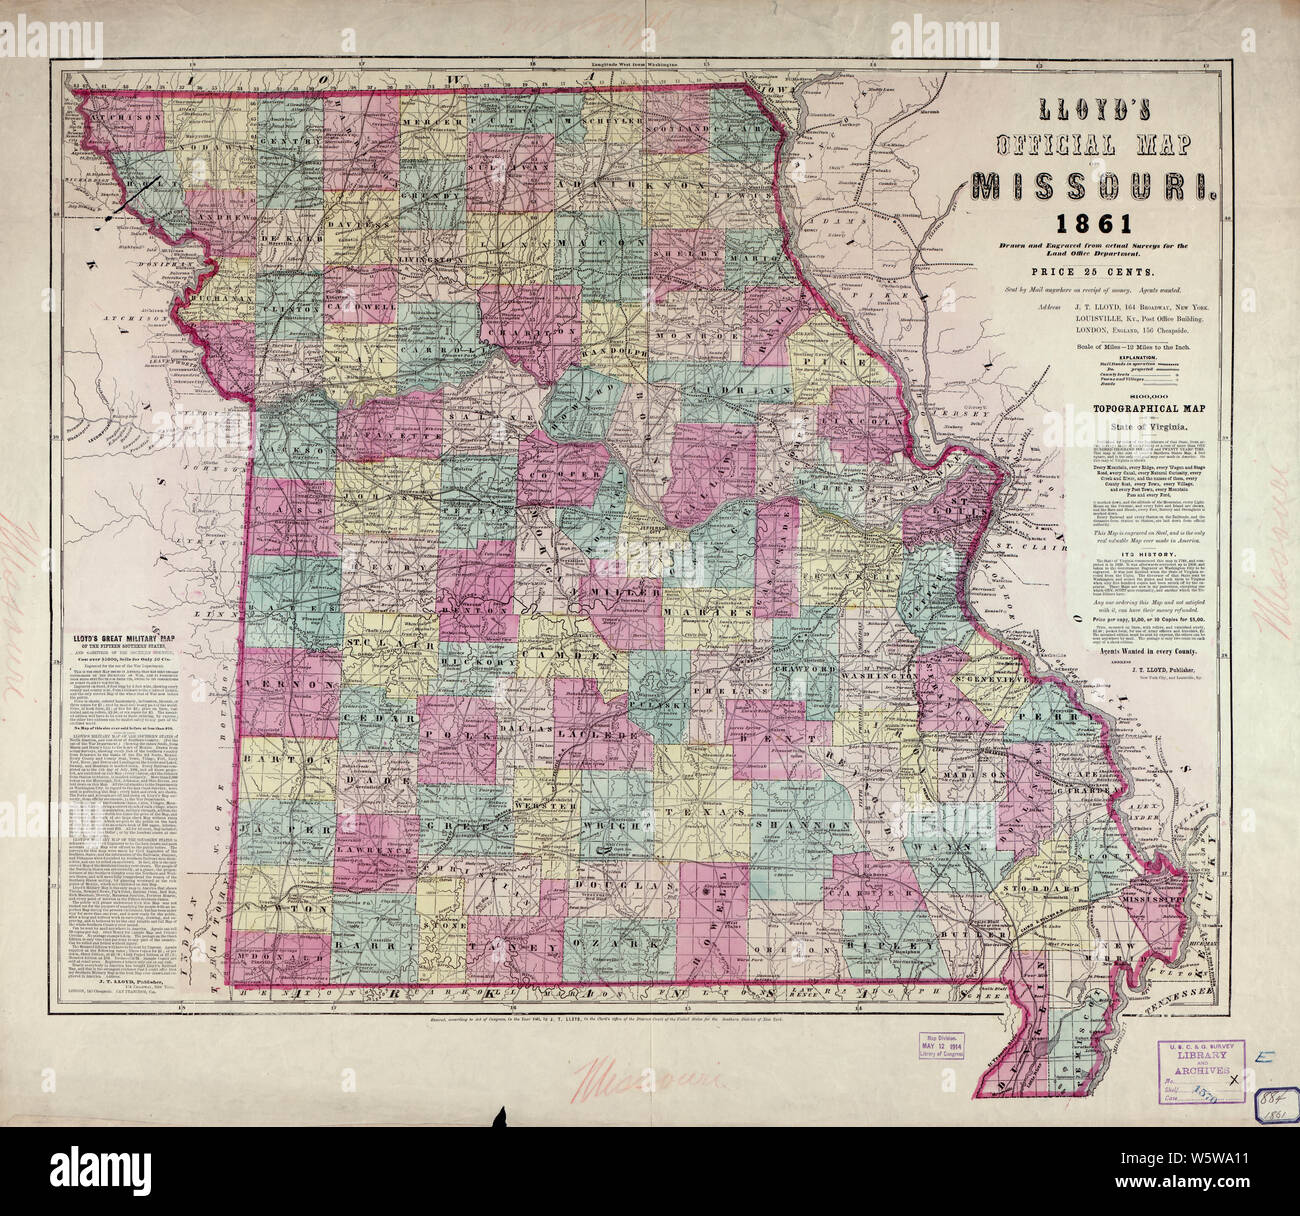 Civil War Maps 0577 Lloyd's official map of Missouri Rebuild and Repair Stock Photo